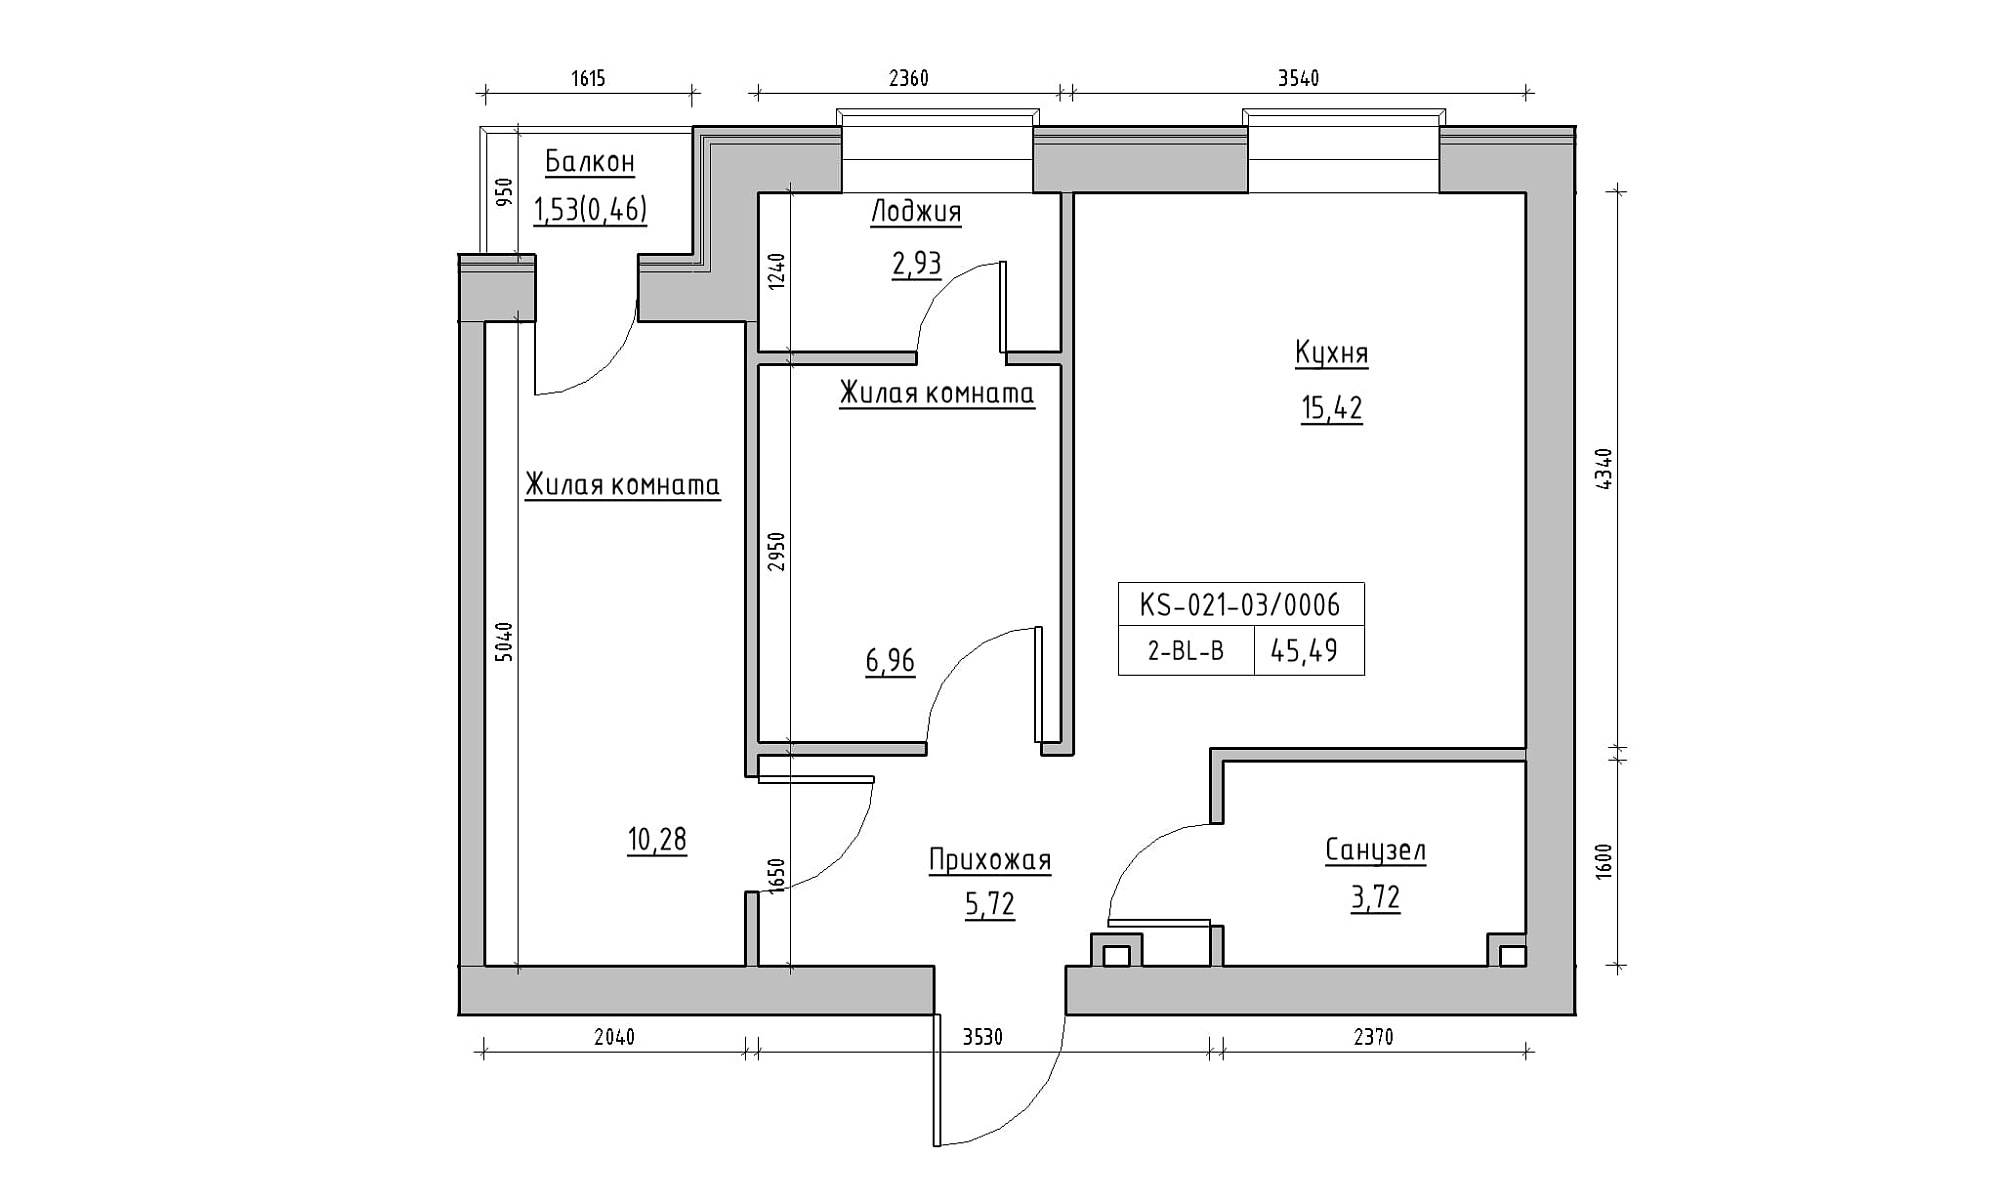 Planning 2-rm flats area 45.49m2, KS-021-03/0006.